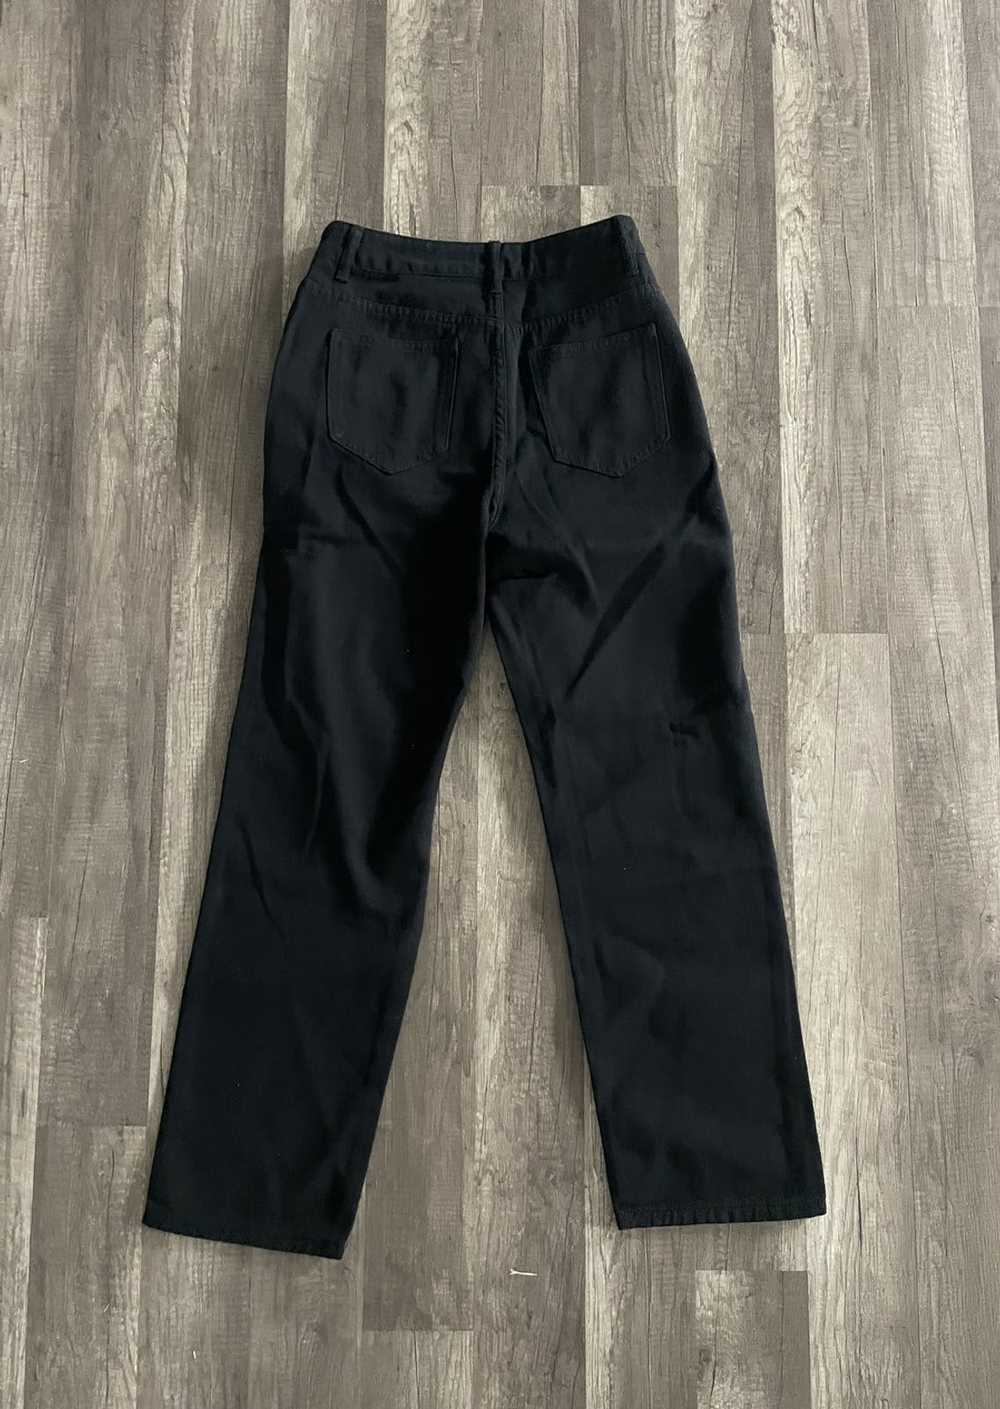 Shein × Streetwear Shein Black Jeans Size Small W… - image 2